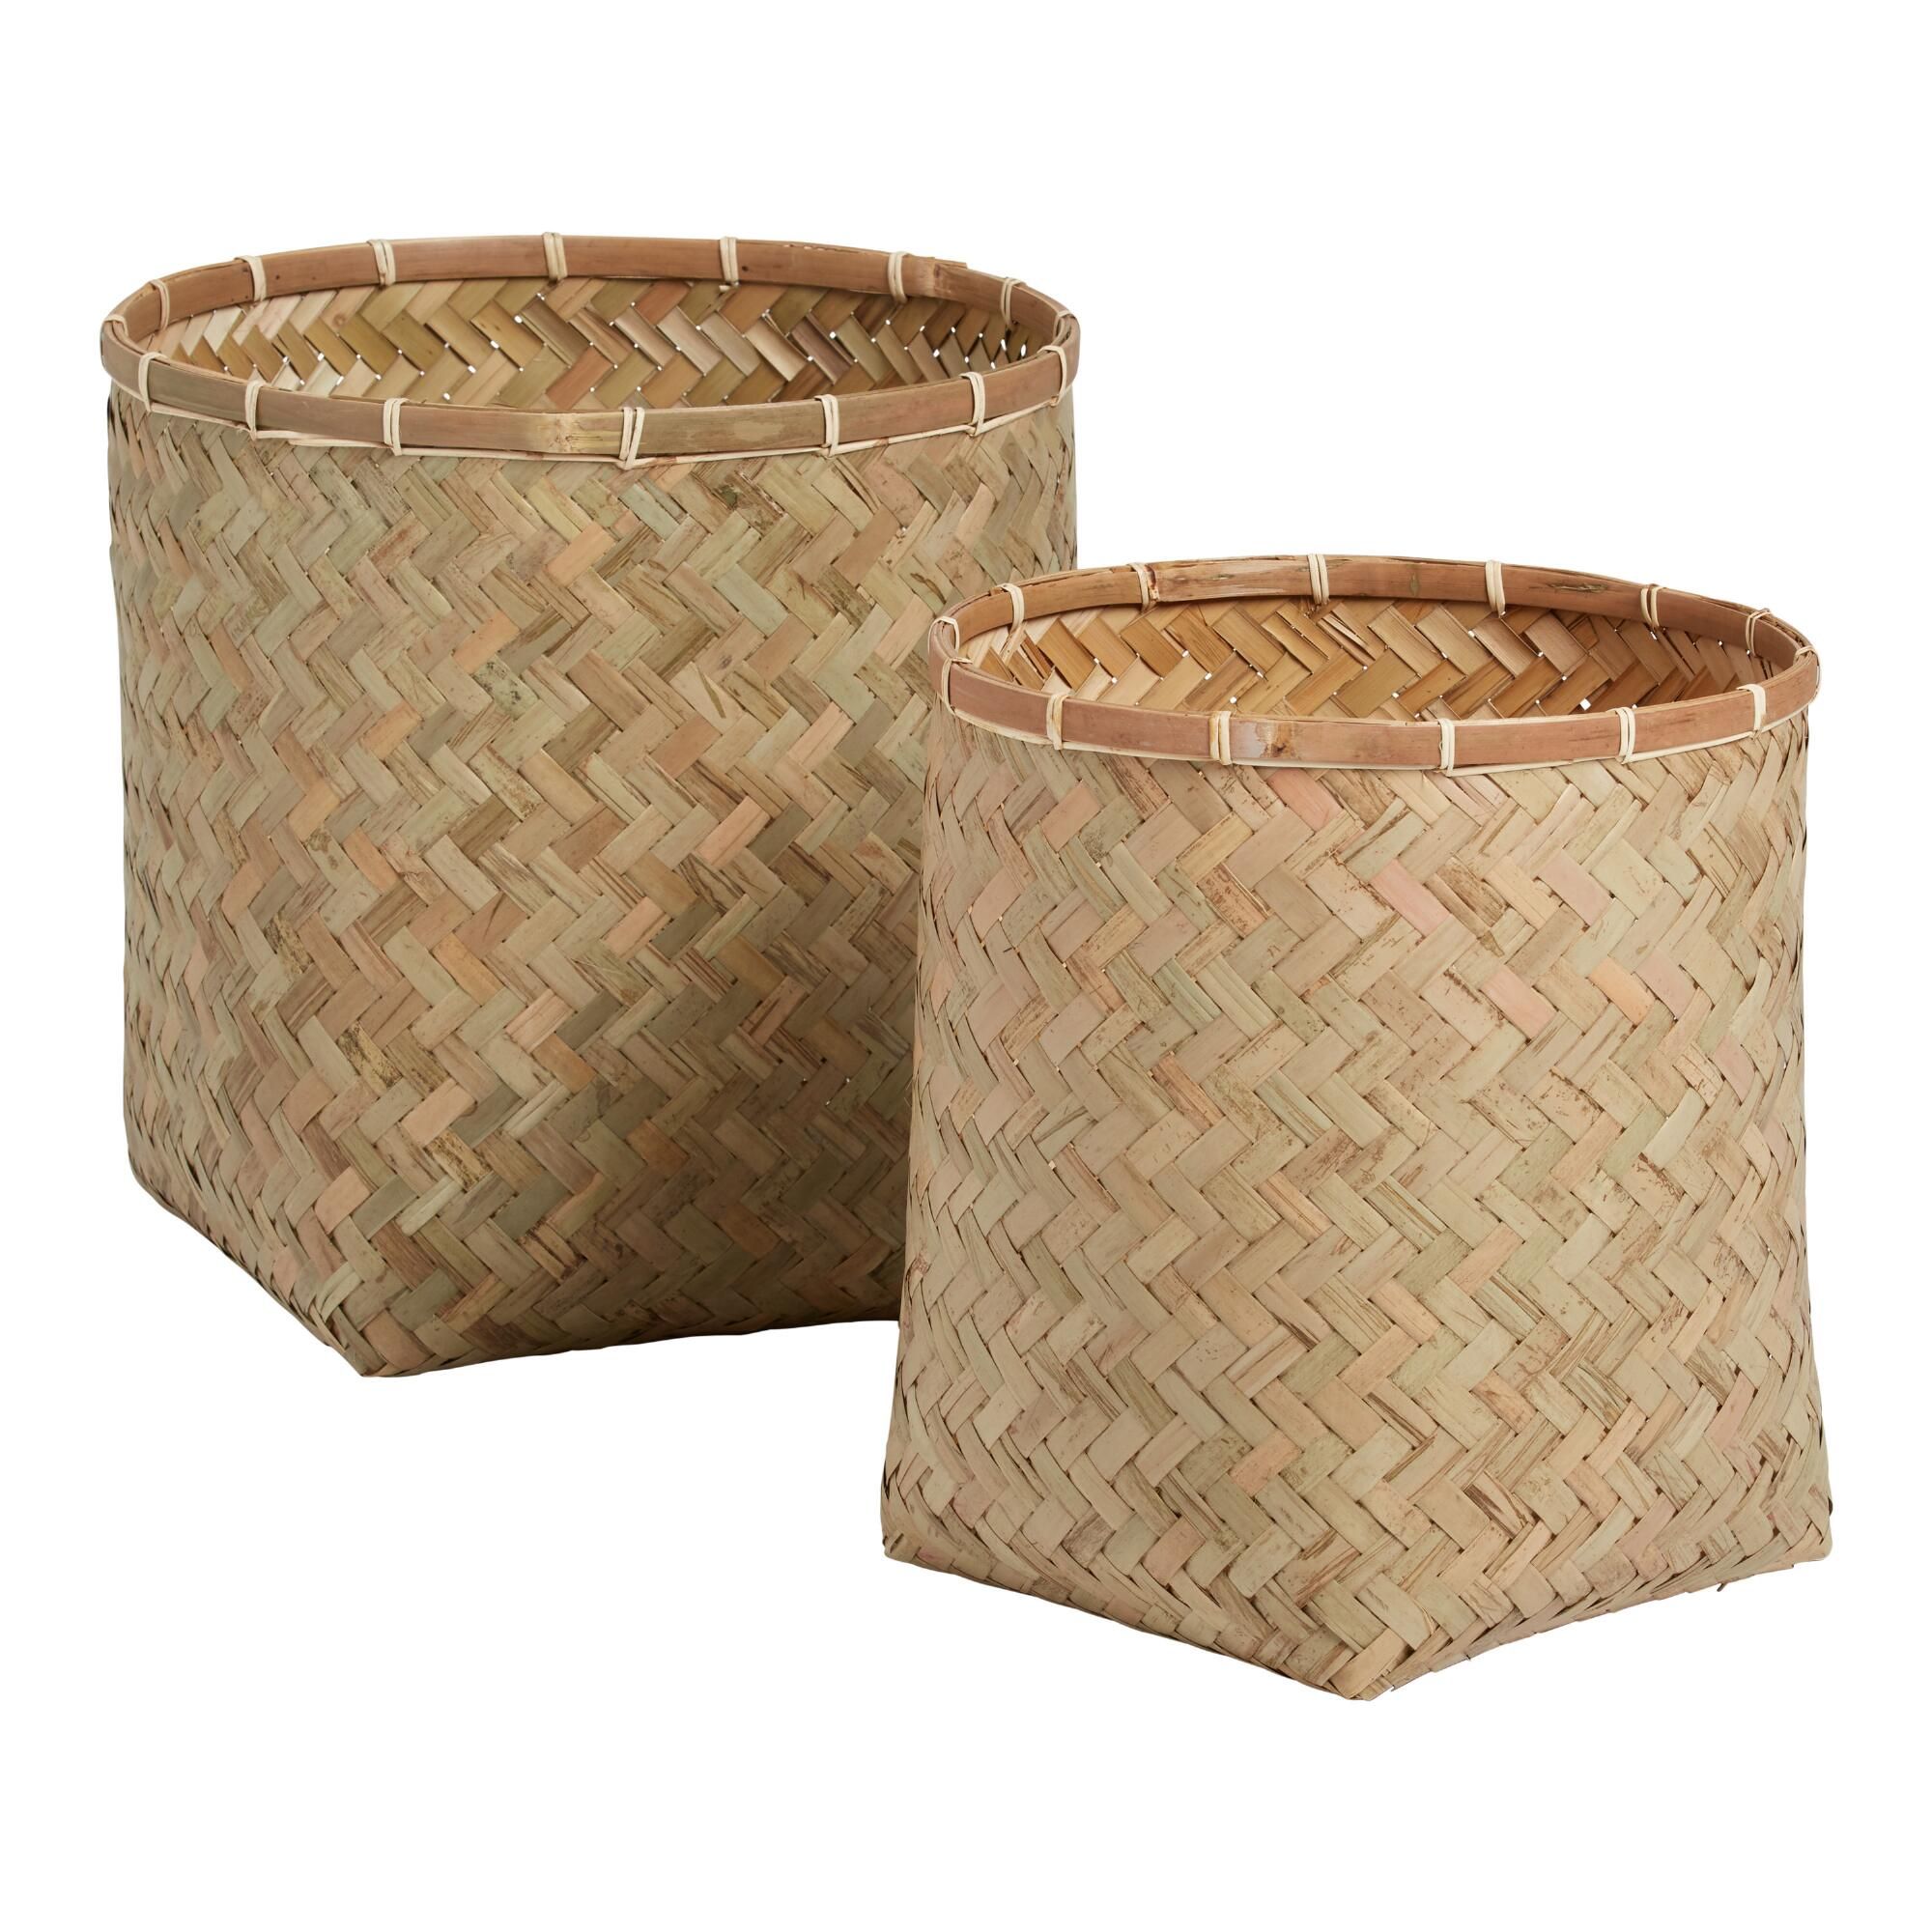 Natural Bamboo Becca Basket - Large by World Market | World Market